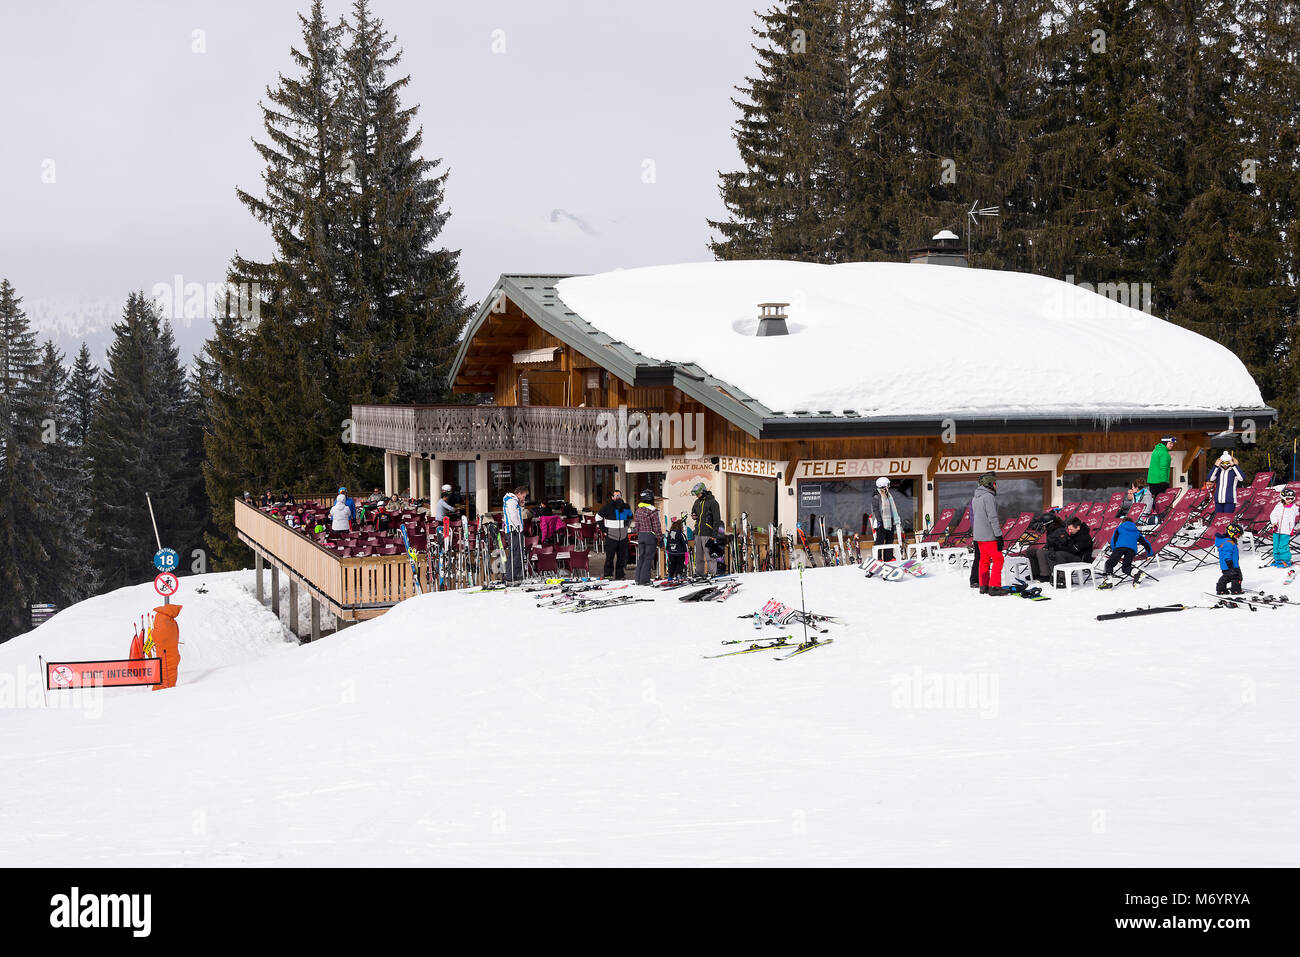 Telebar du Mont Blanc Brasserie and Restaurant on the Ski Slopes at Les Gets Ski Resort near Morzine Haute Savoie Portes du Soleil France Stock Photo